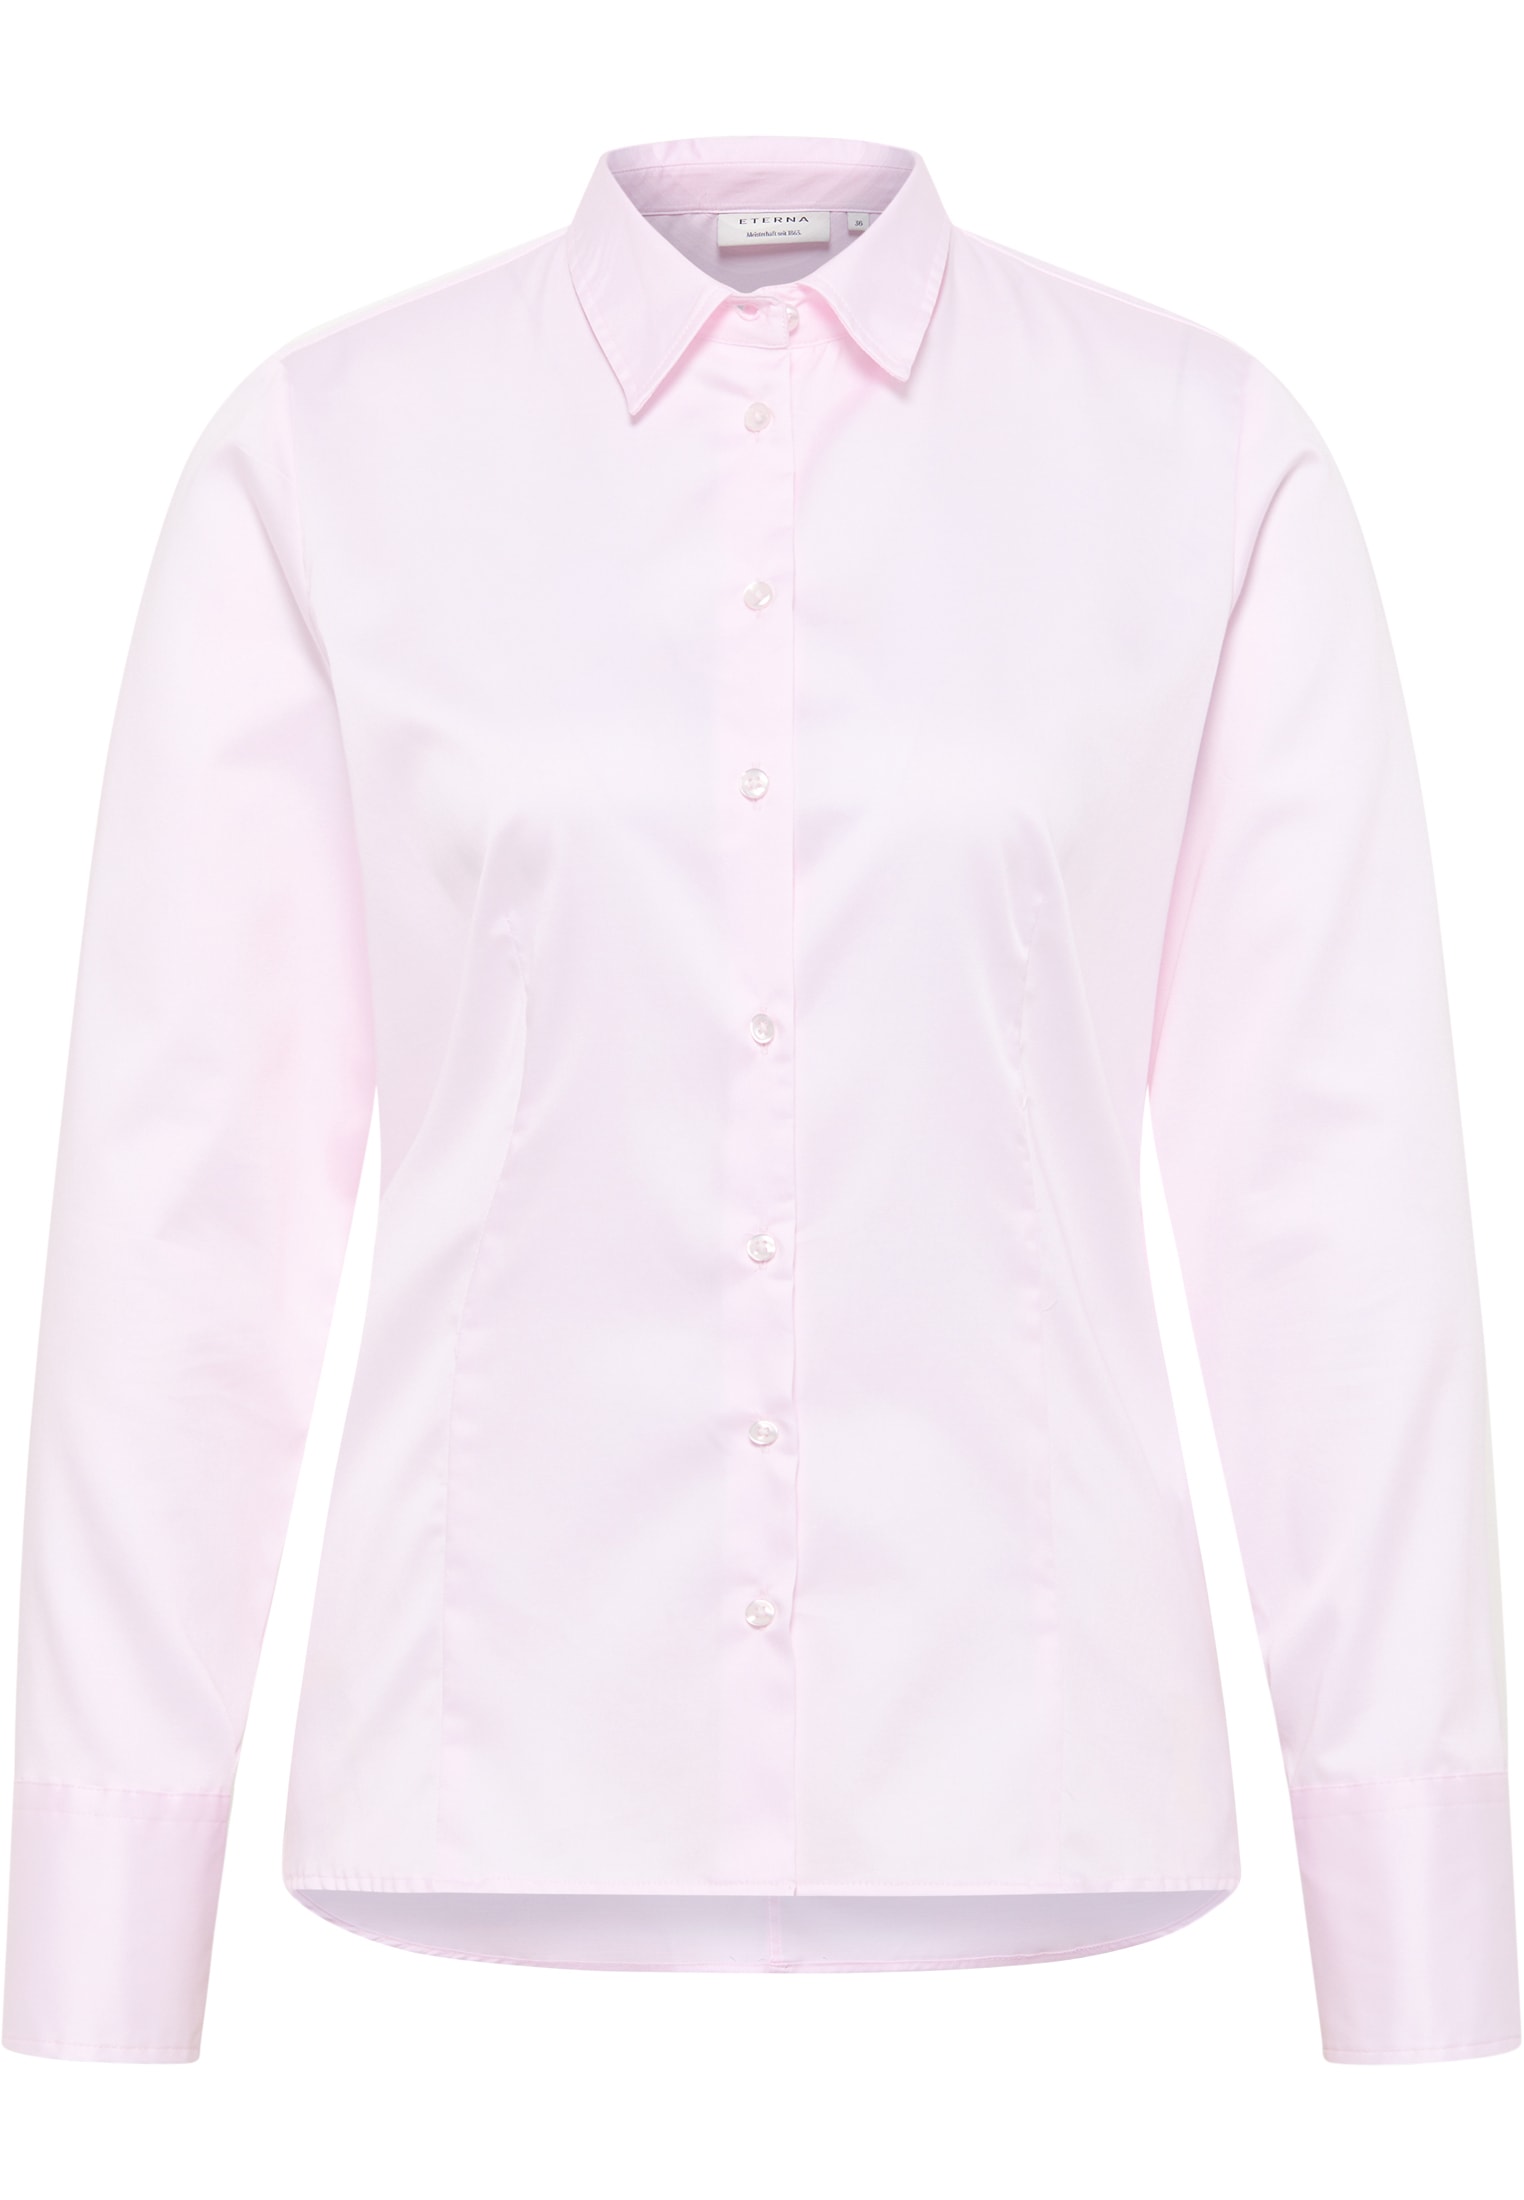 unifarben | Bluse | 44 rosa Langarm rosa Shirt 2BL00399-15-11-44-1/1 | Satin in |